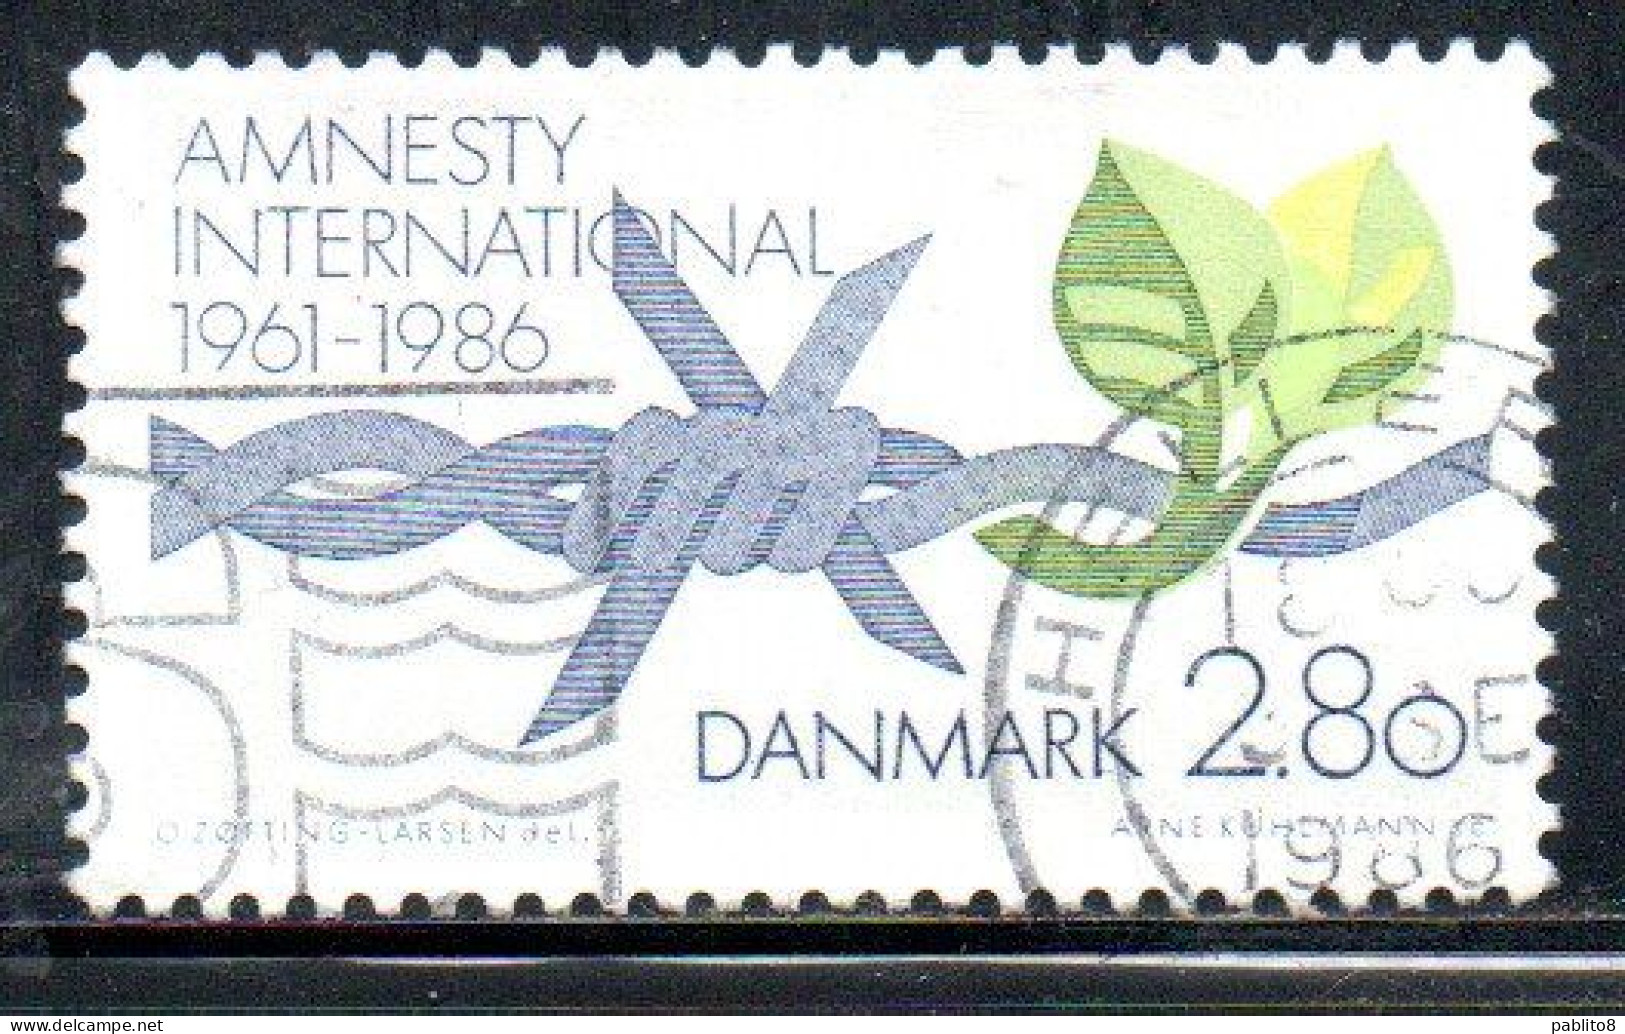 DANEMARK DANMARK DENMARK DANIMARCA 1986 AMNESTY INTERNATIONAL 2.80k USED USATO OBLITERE' - Gebraucht